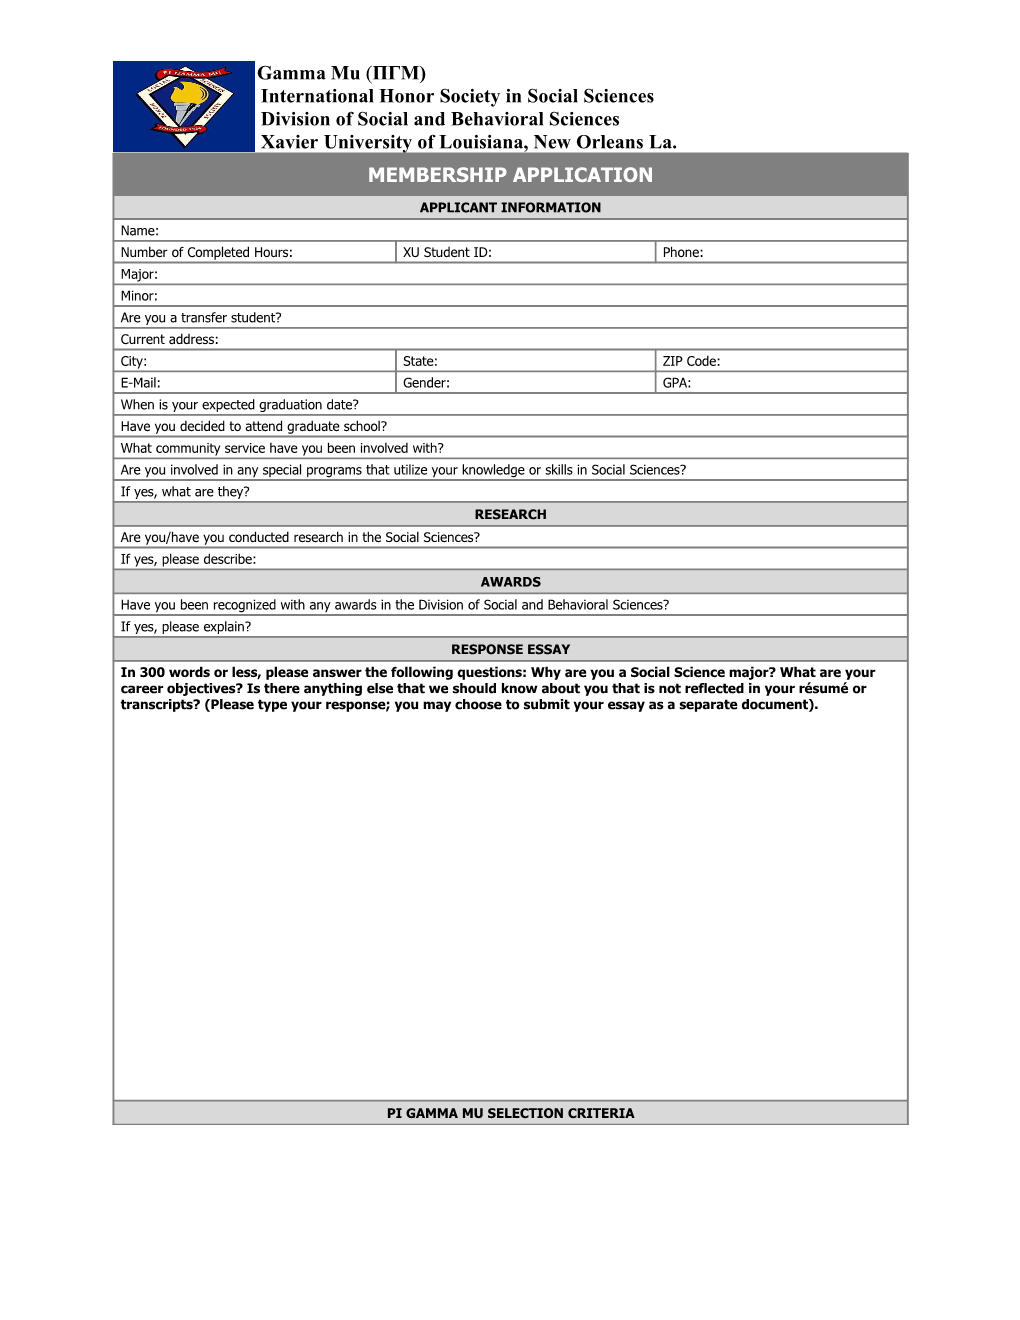 Membership Application Form s9